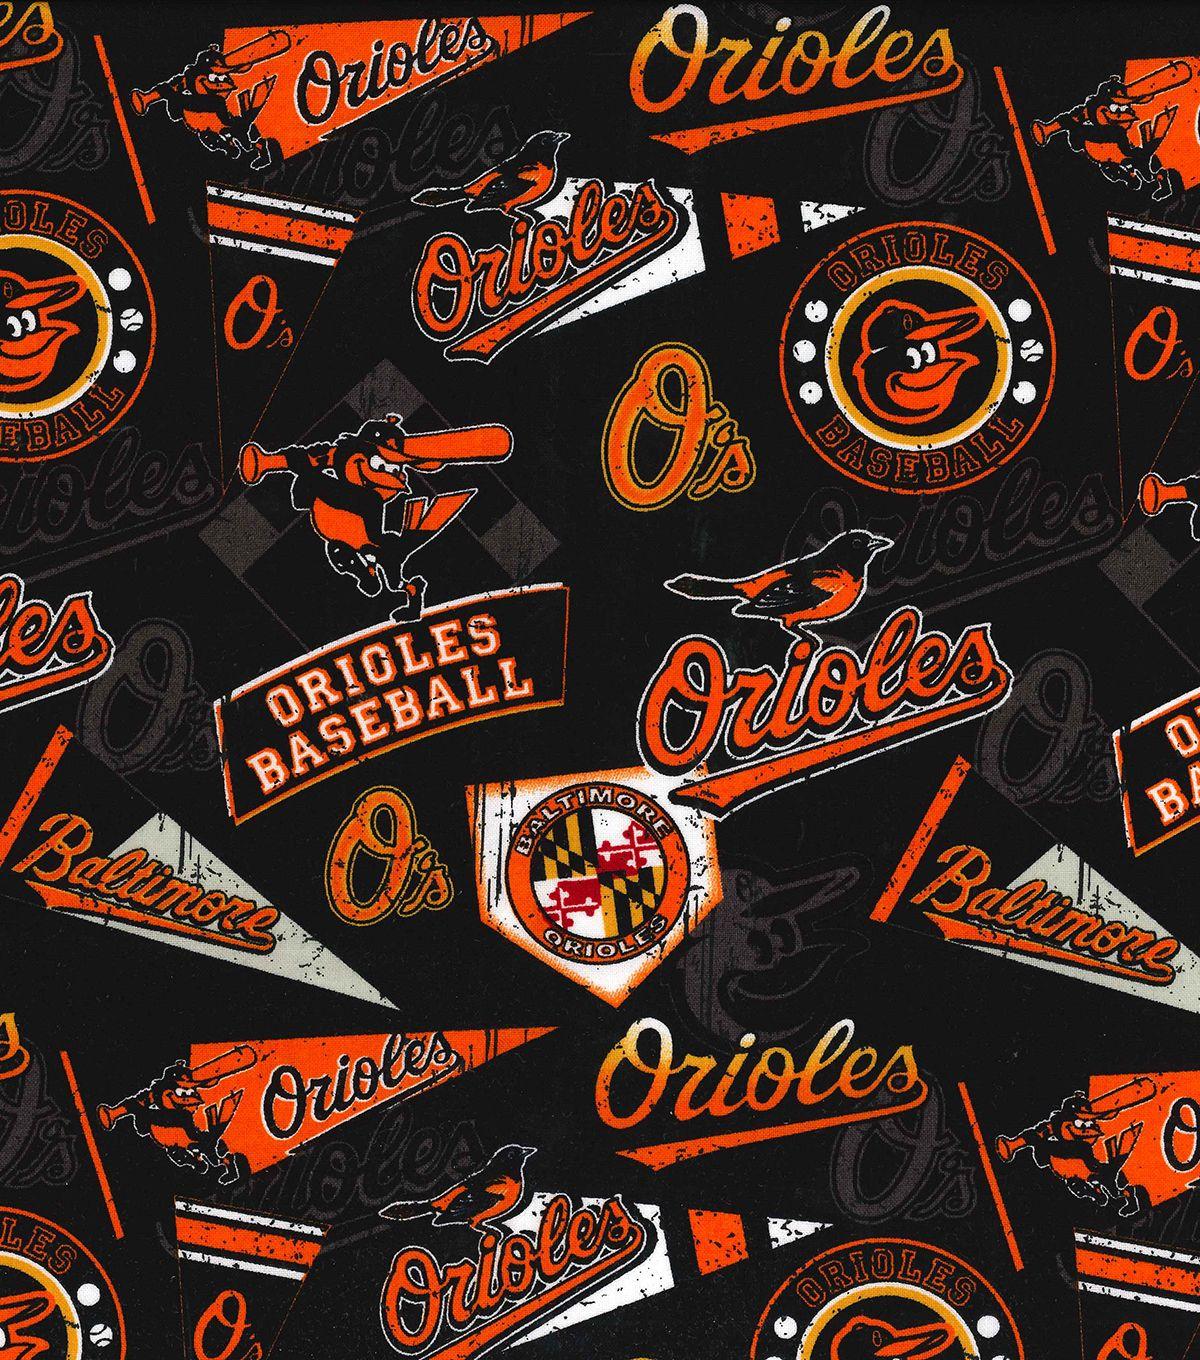 Baltimore Orioles 2018 Wallpapers - Wallpaper Cave